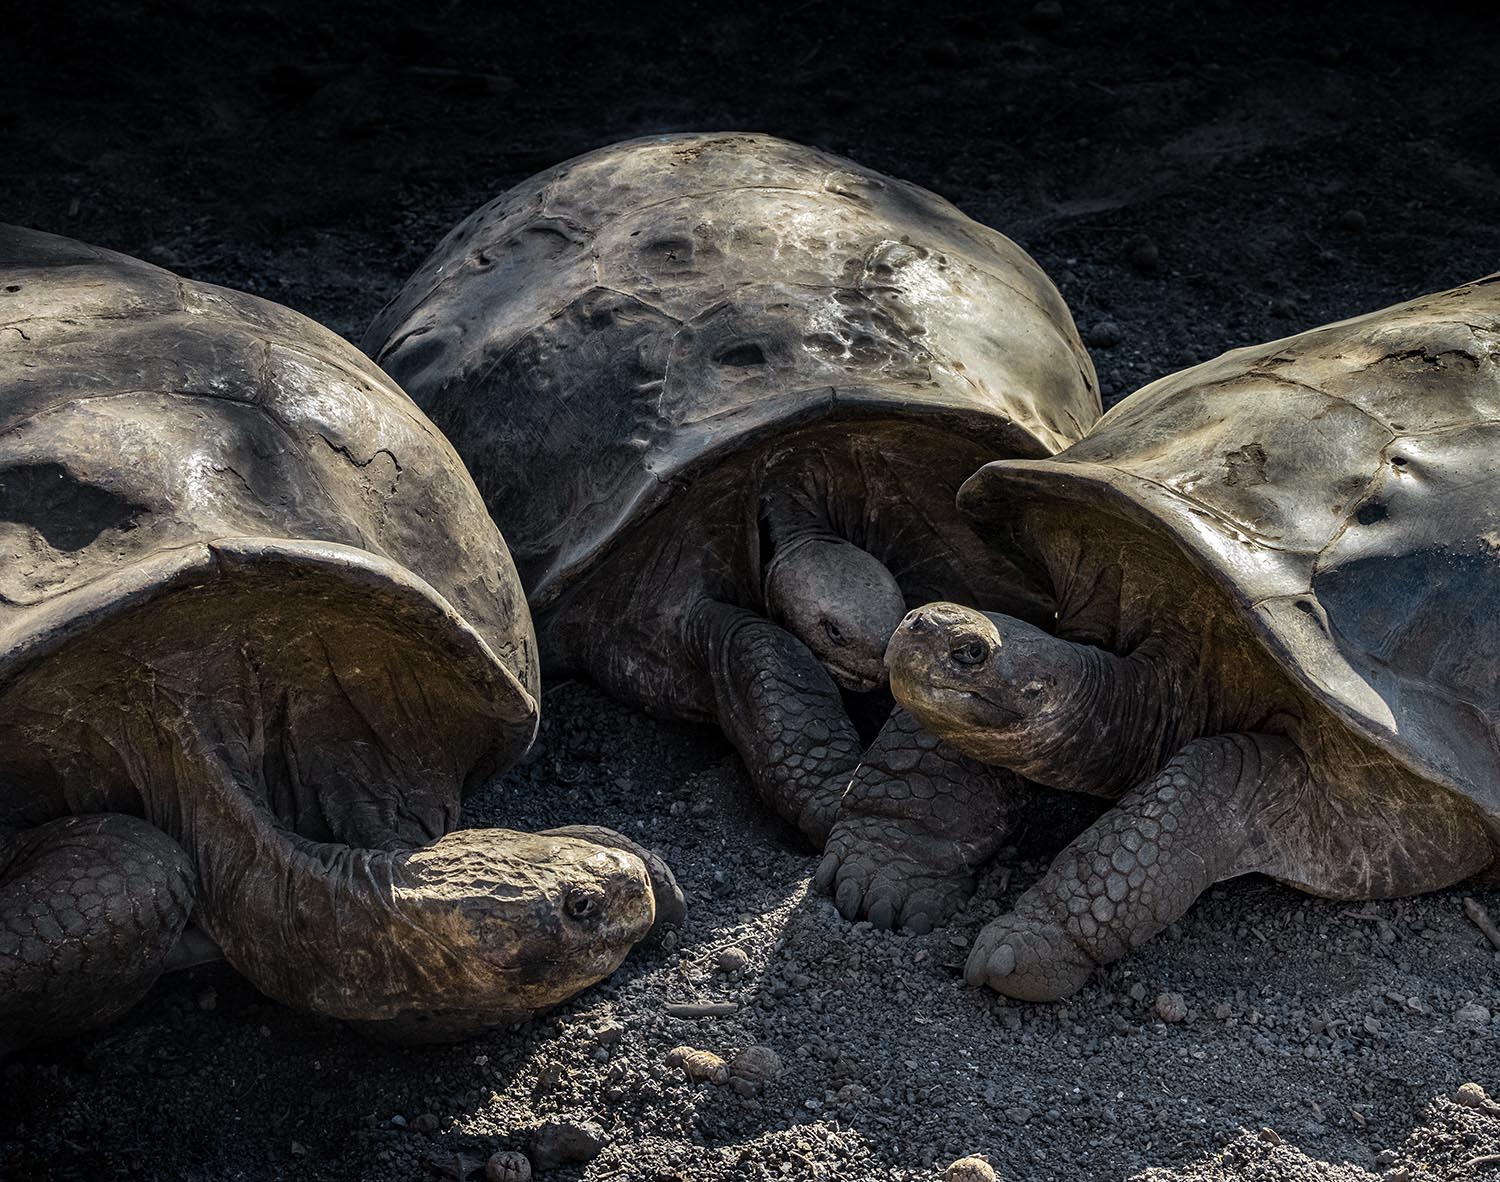 Three tortoises convening in the sand